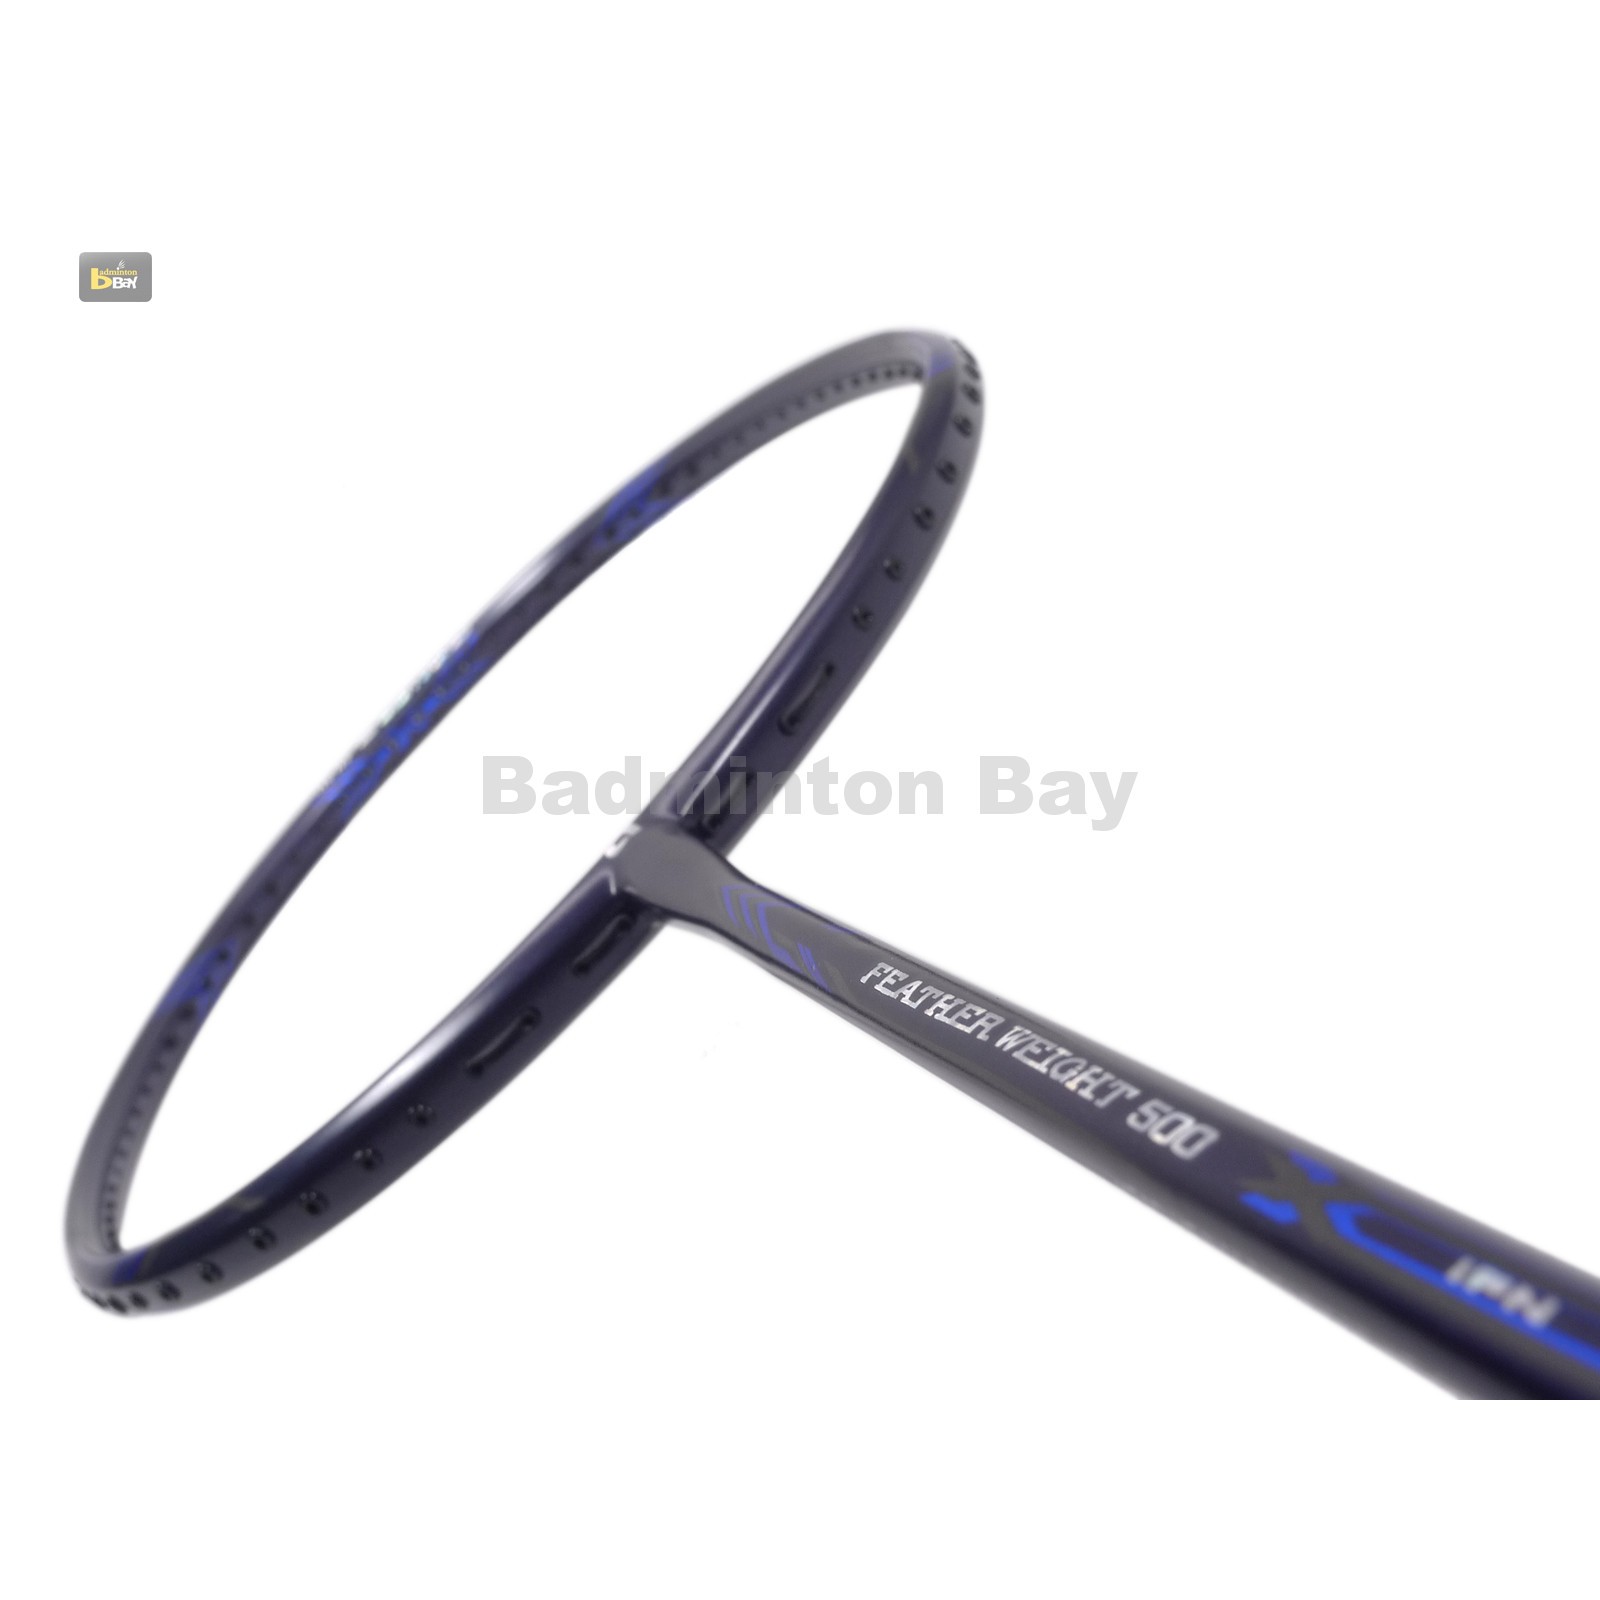 Apacs Badminton Racket Feather Weight 500